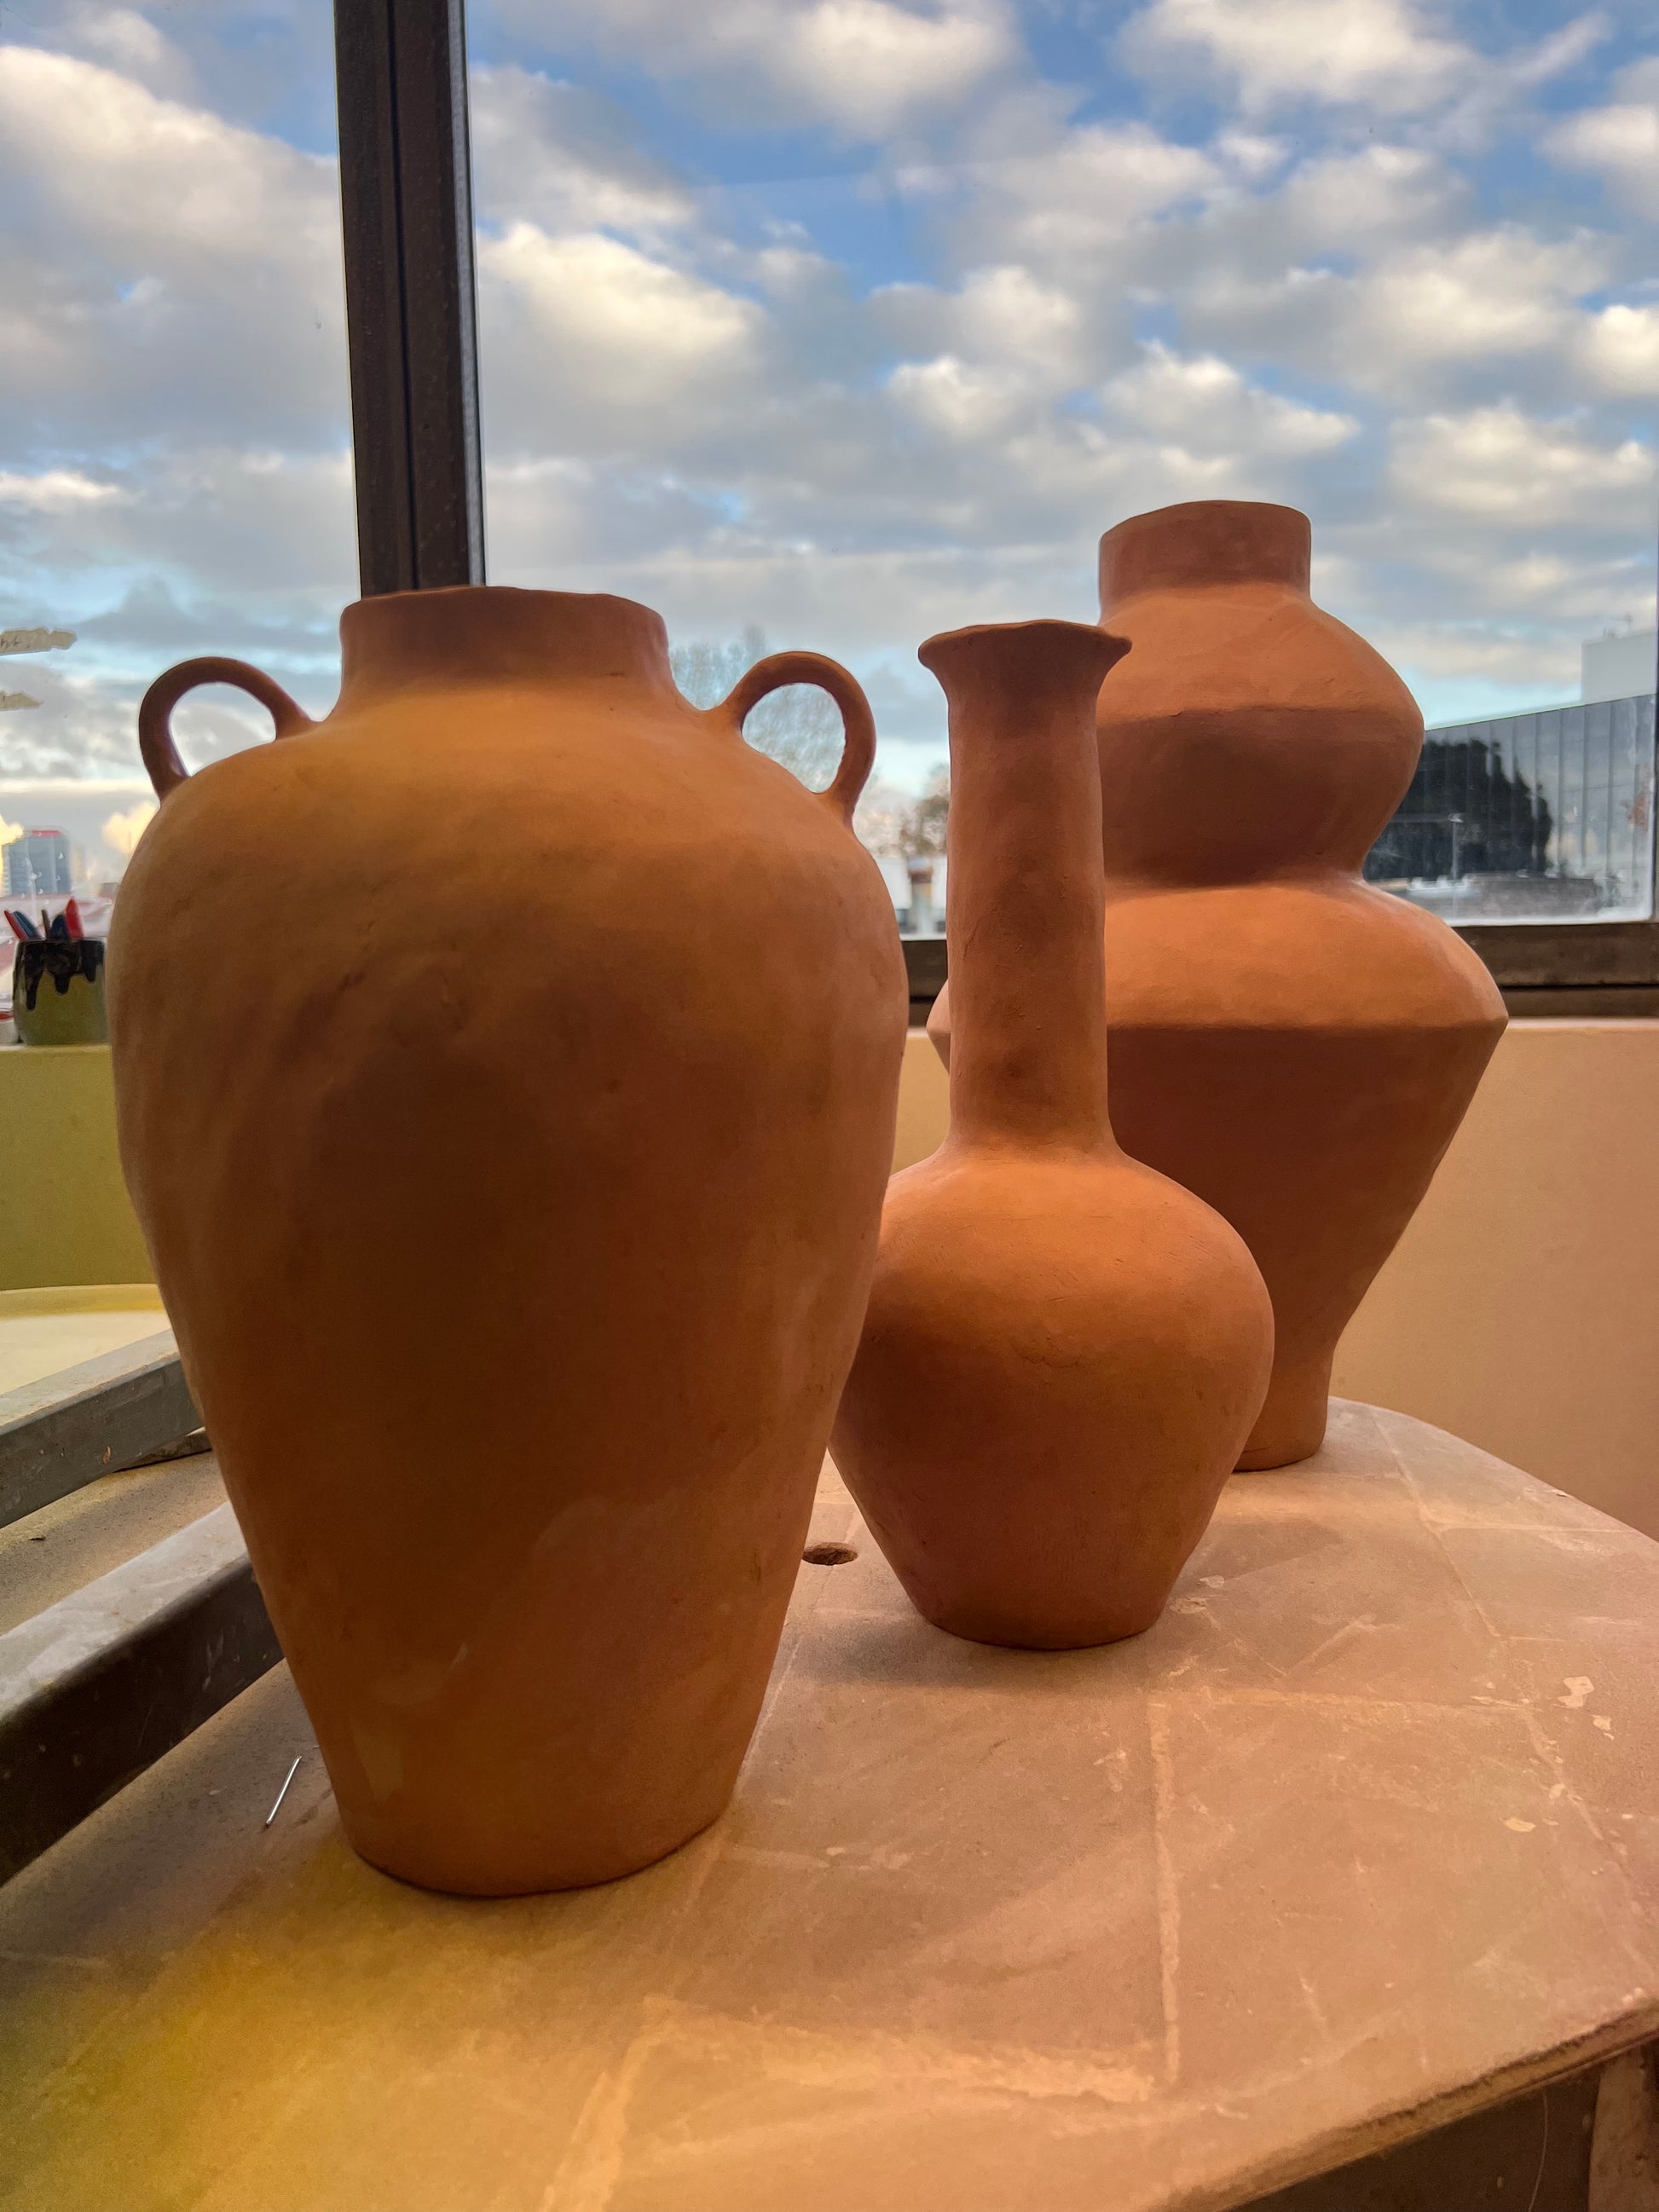 Ceramic pots and vases